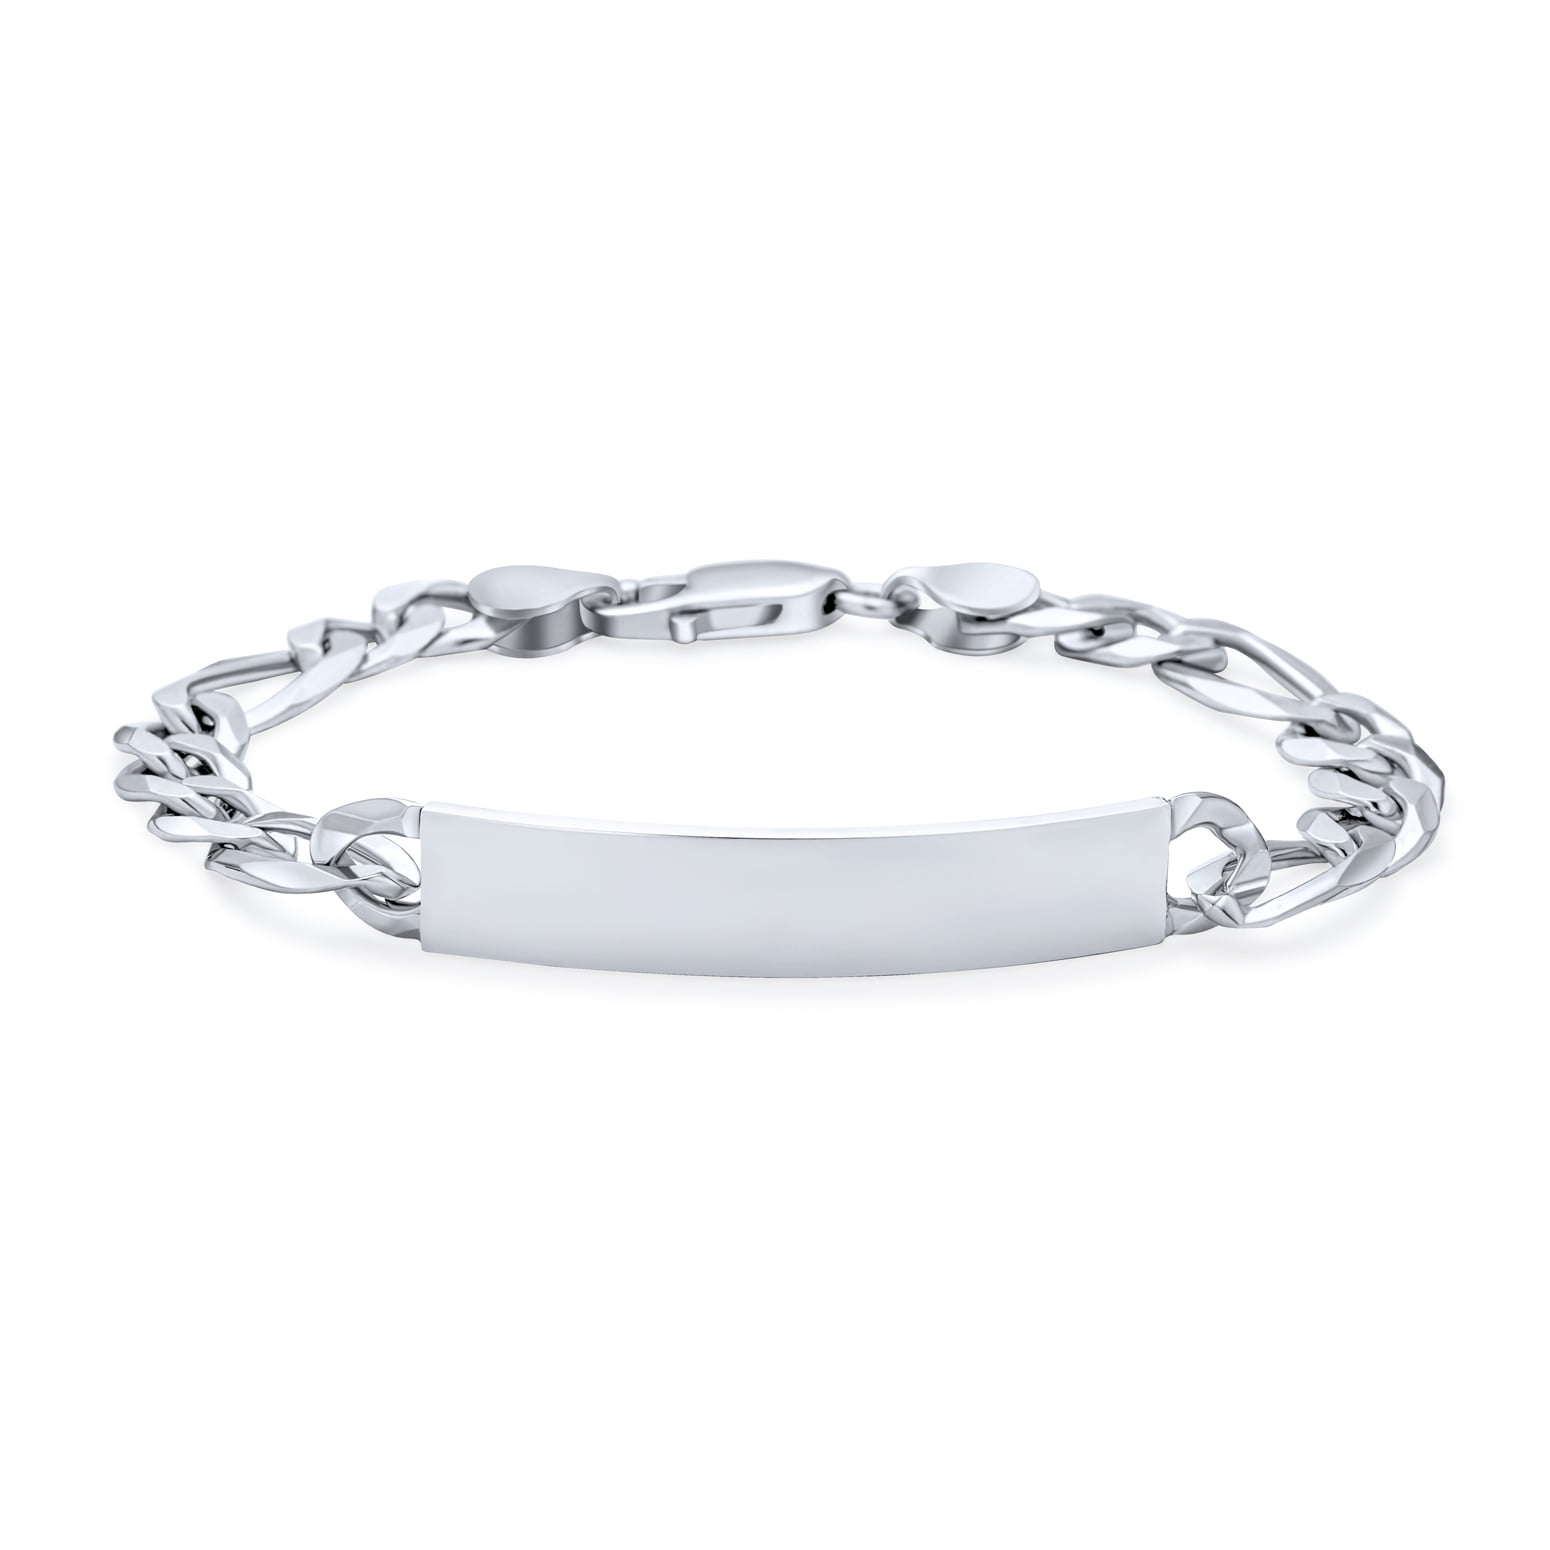 Bulova Men's Link Beaded And Spinel Bracelet | Men's Bracelets |  Accessories - Shop Your Navy Exchange - Official Site